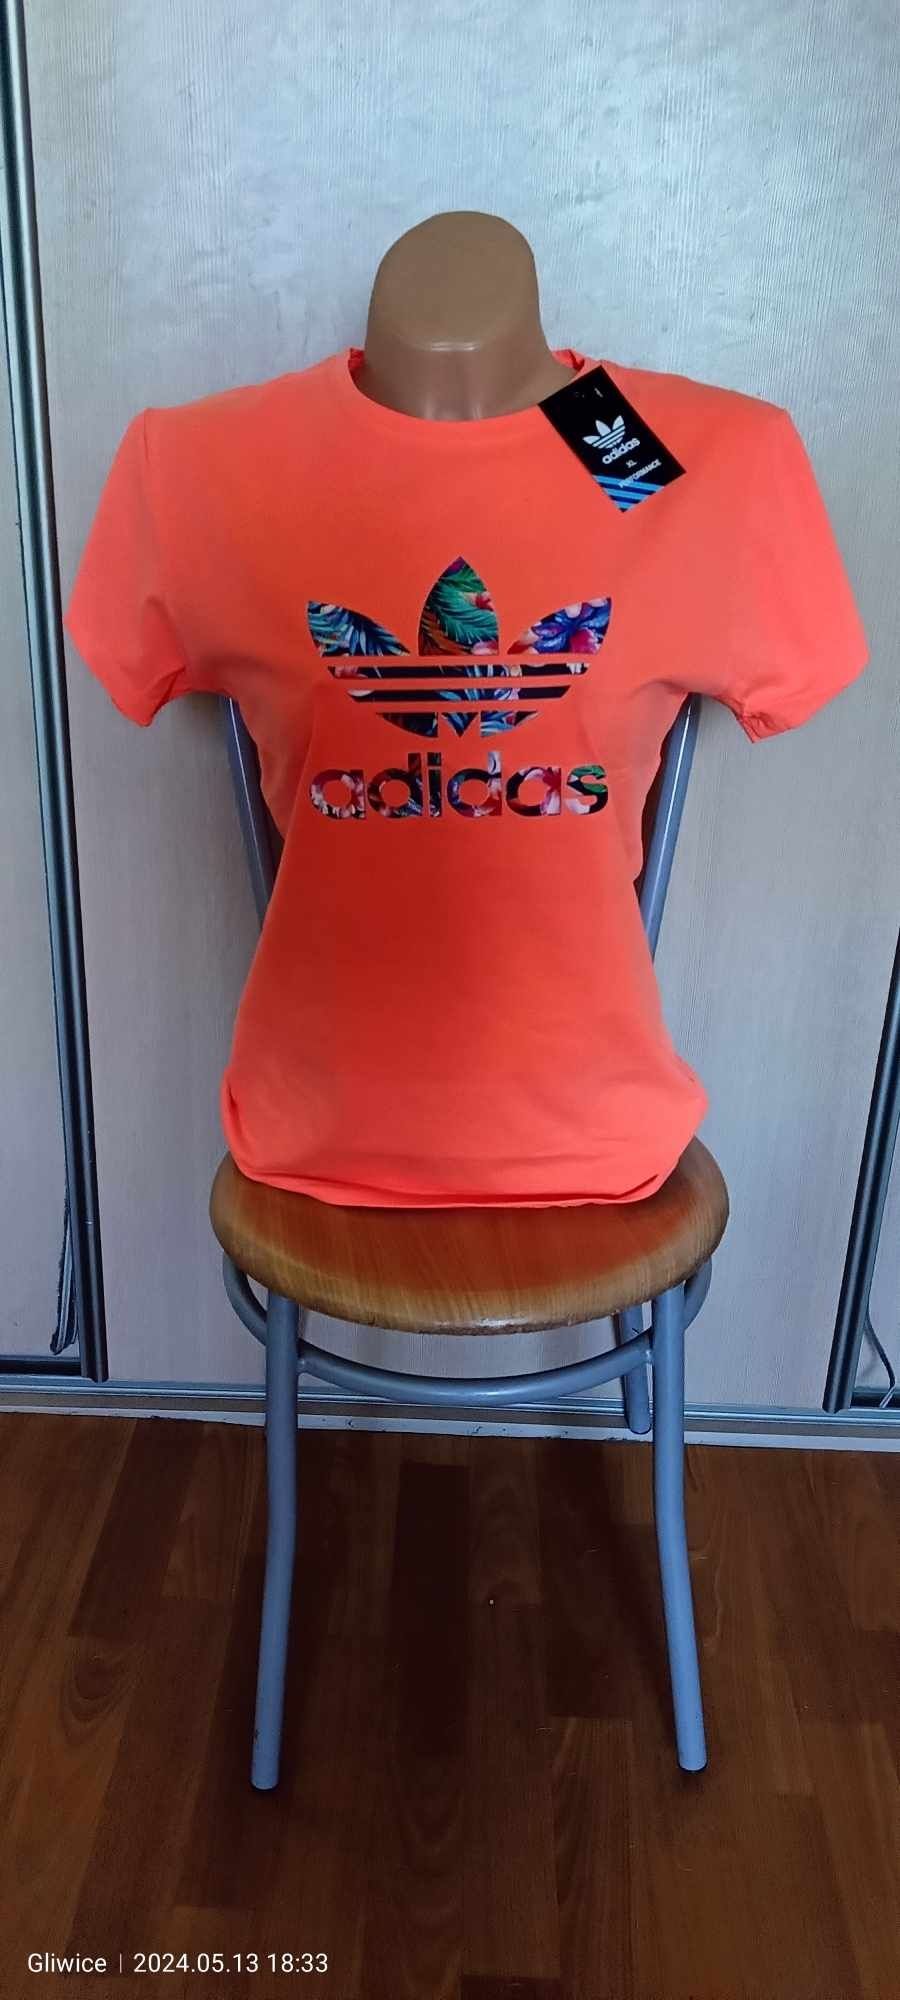 Koszulka damska XL pomarańczowa